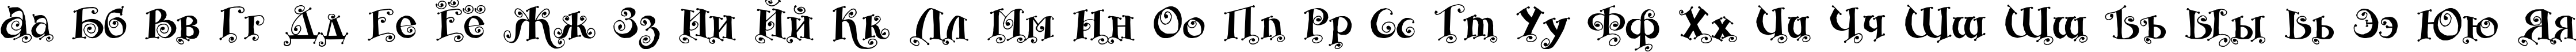 Пример написания русского алфавита шрифтом Fairy Tale